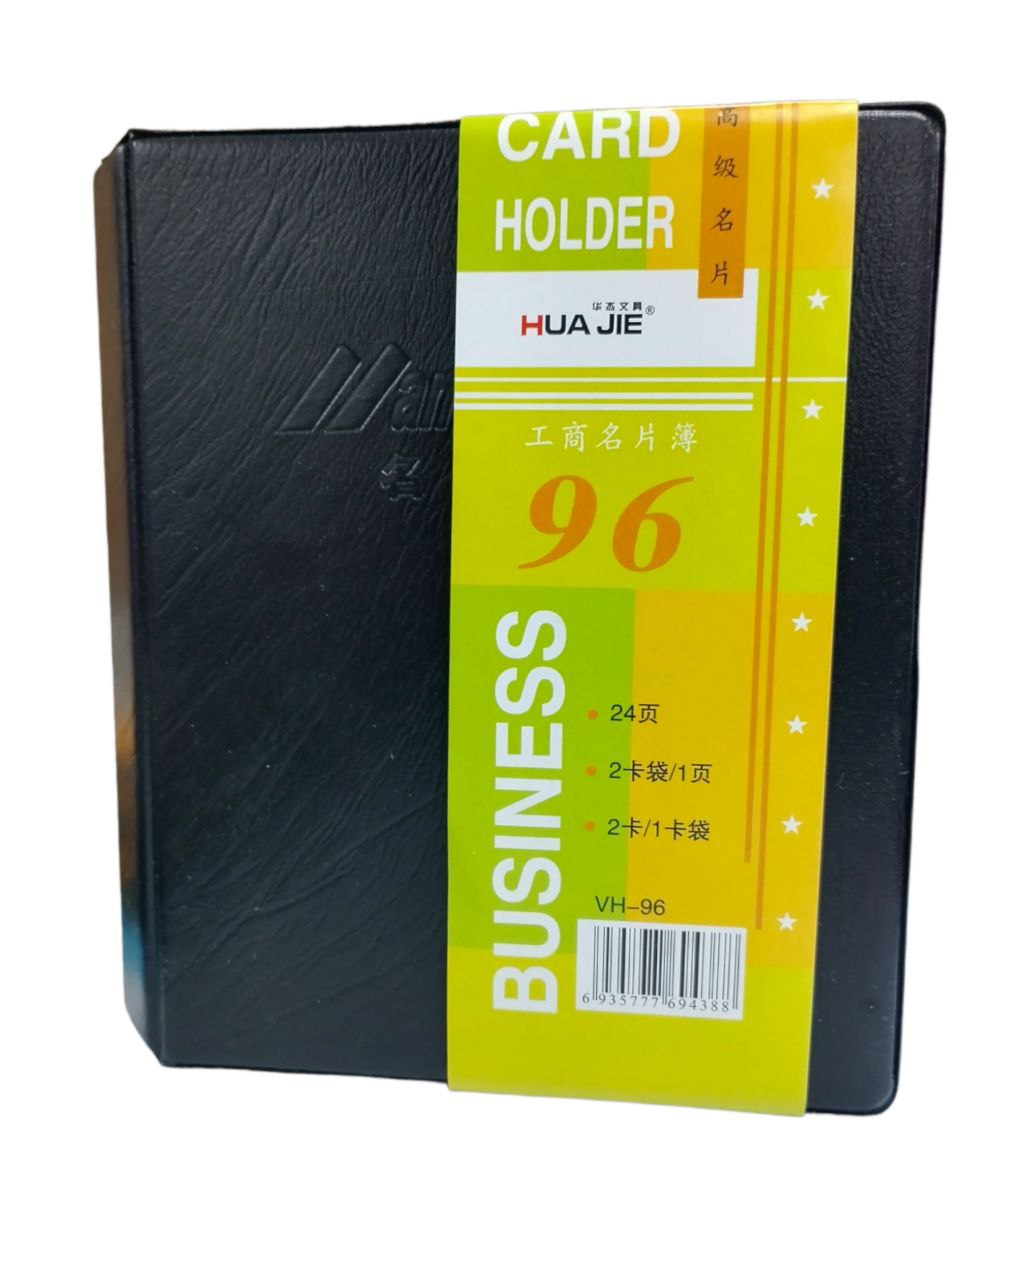 Card Holder 96 Pockets || ملف حافظ كروت بزنس كارد ٩٦ جيب⁩⁩⁩